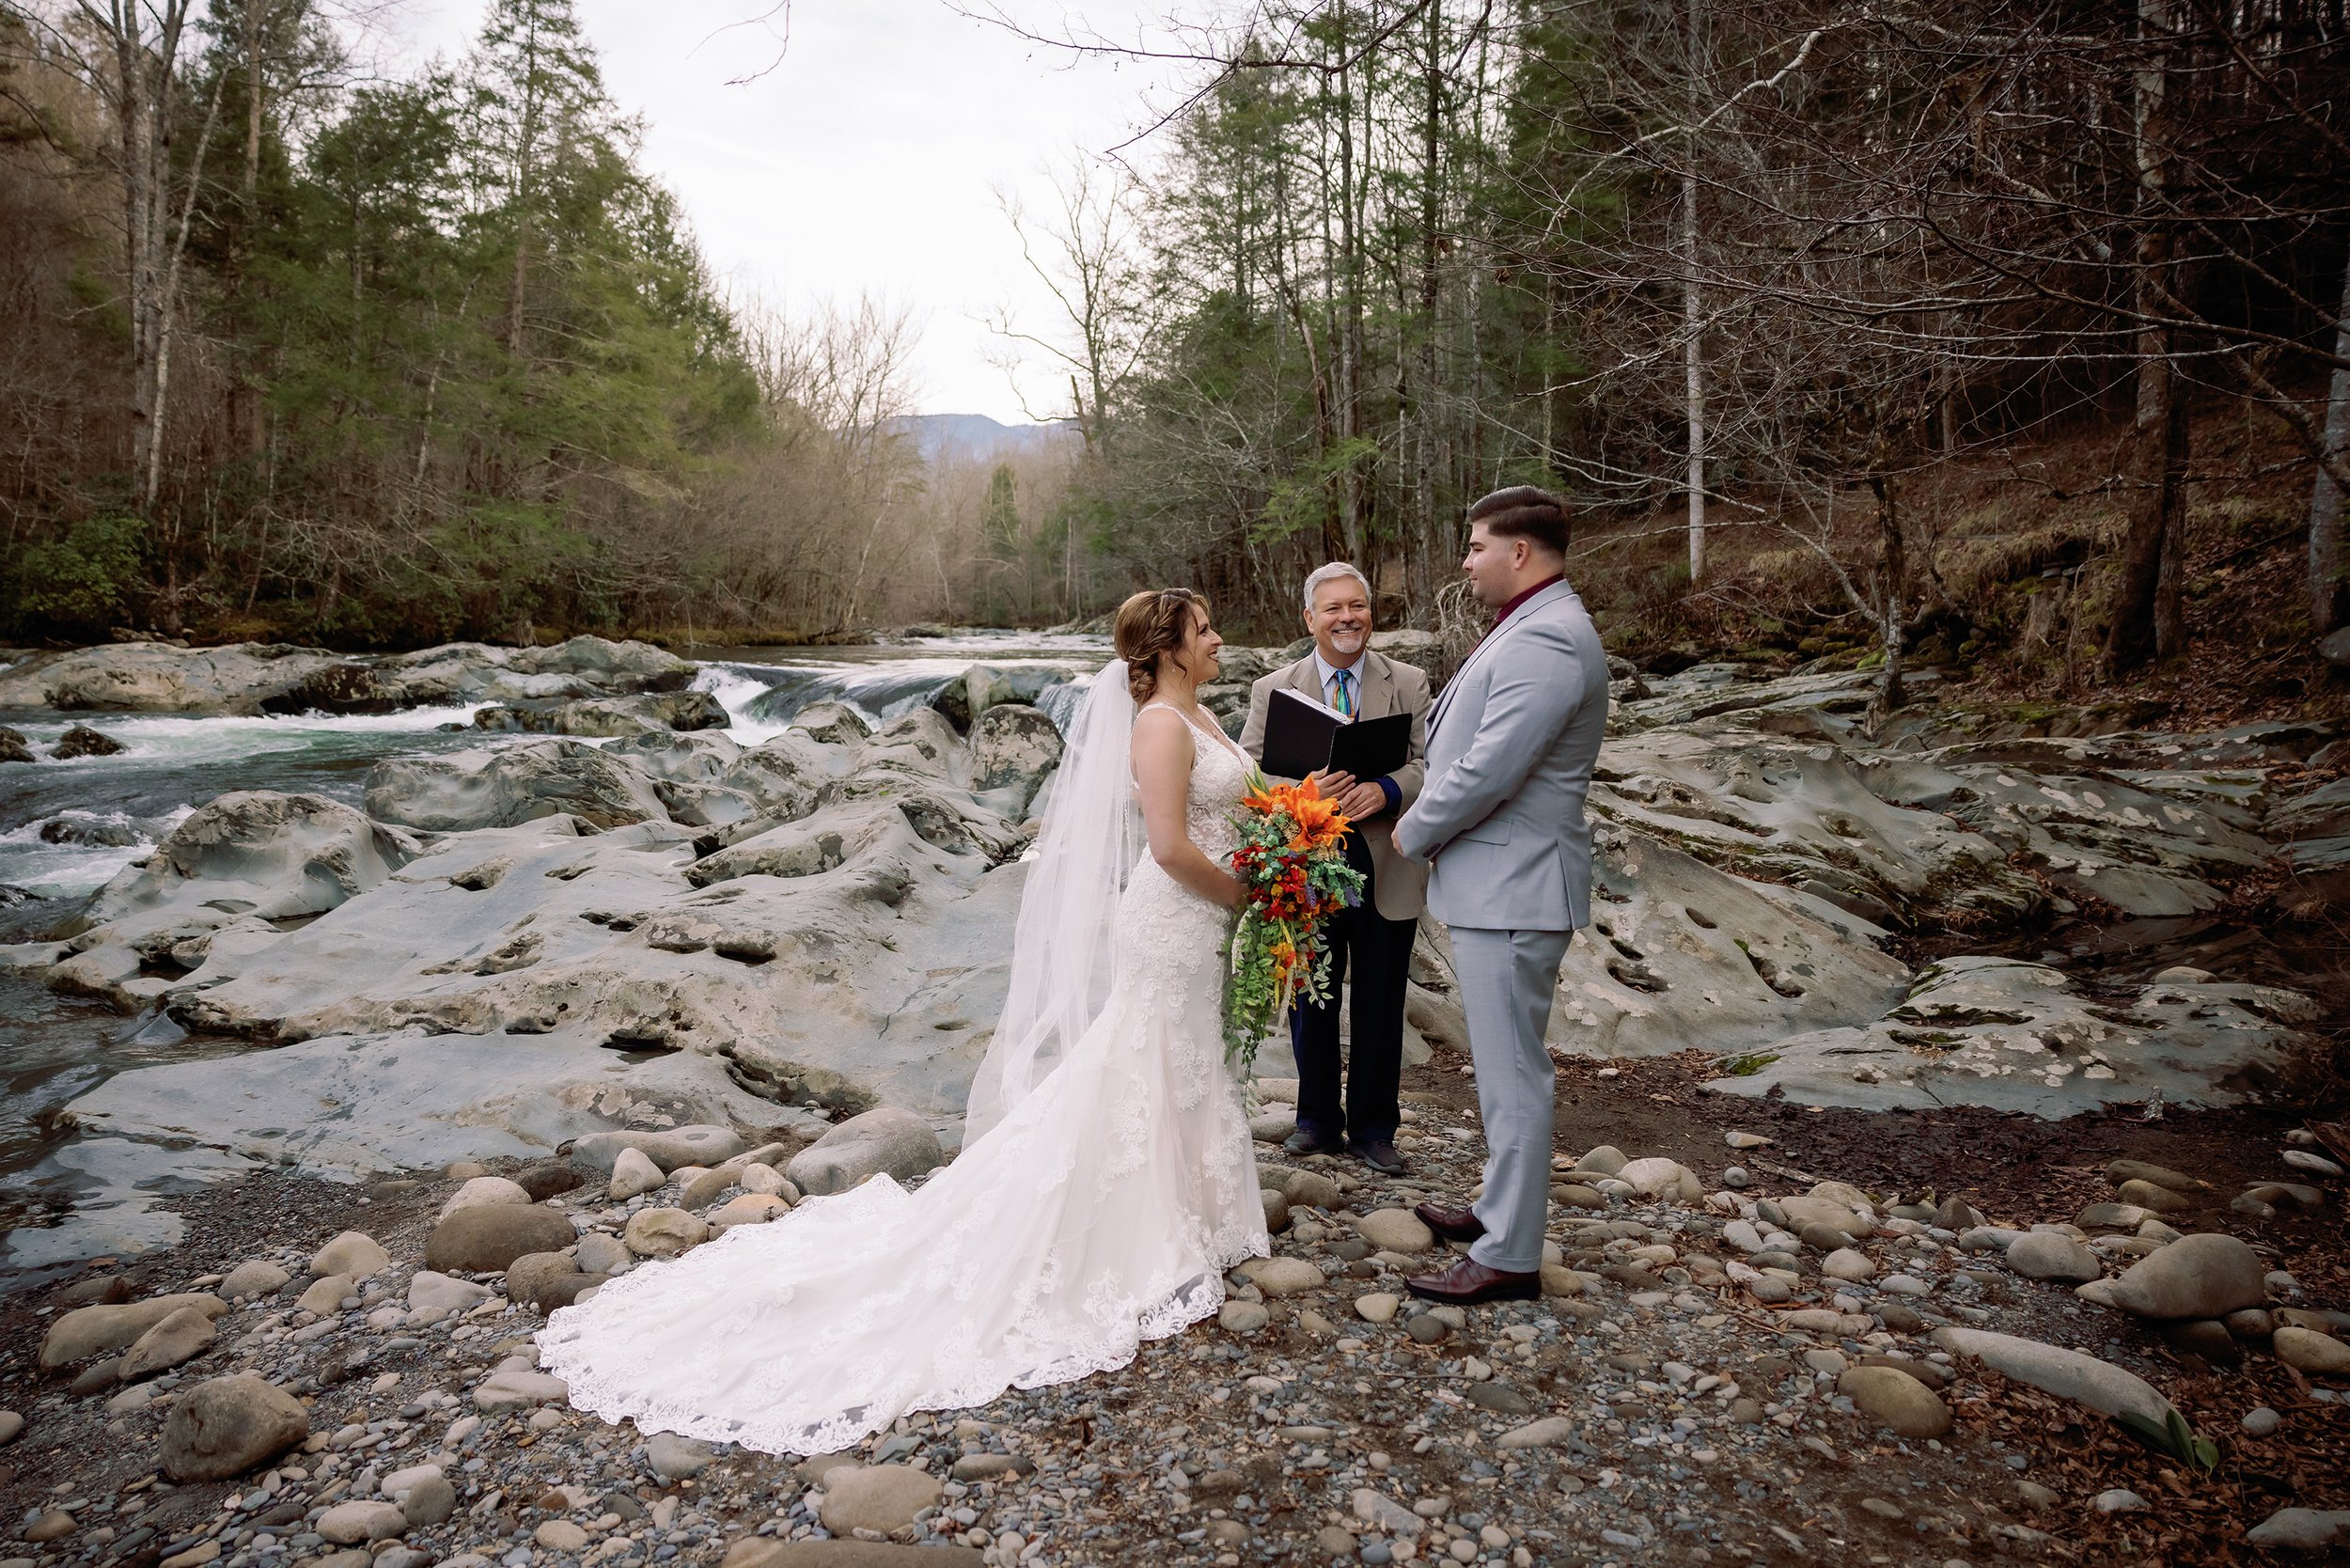 greenbrier-elopement-ceremony-on-rocks.jpg